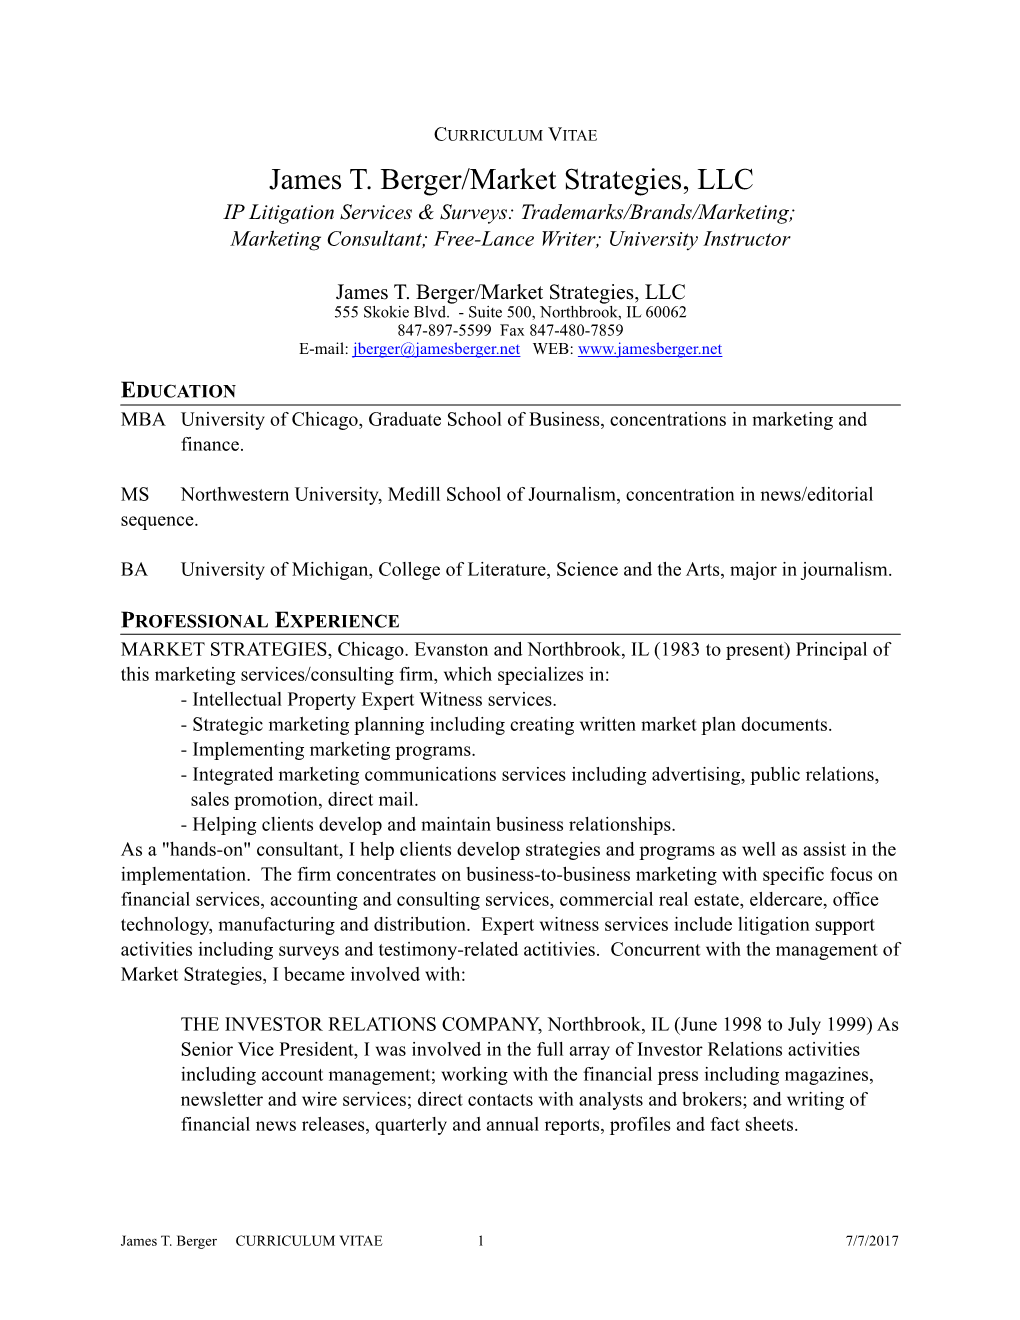 James T. Berger/Market Strategies, LLC IP Litigation Services & Surveys: Trademarks/Brands/Marketing; Marketing Consultant; Free-Lance Writer; University Instructor